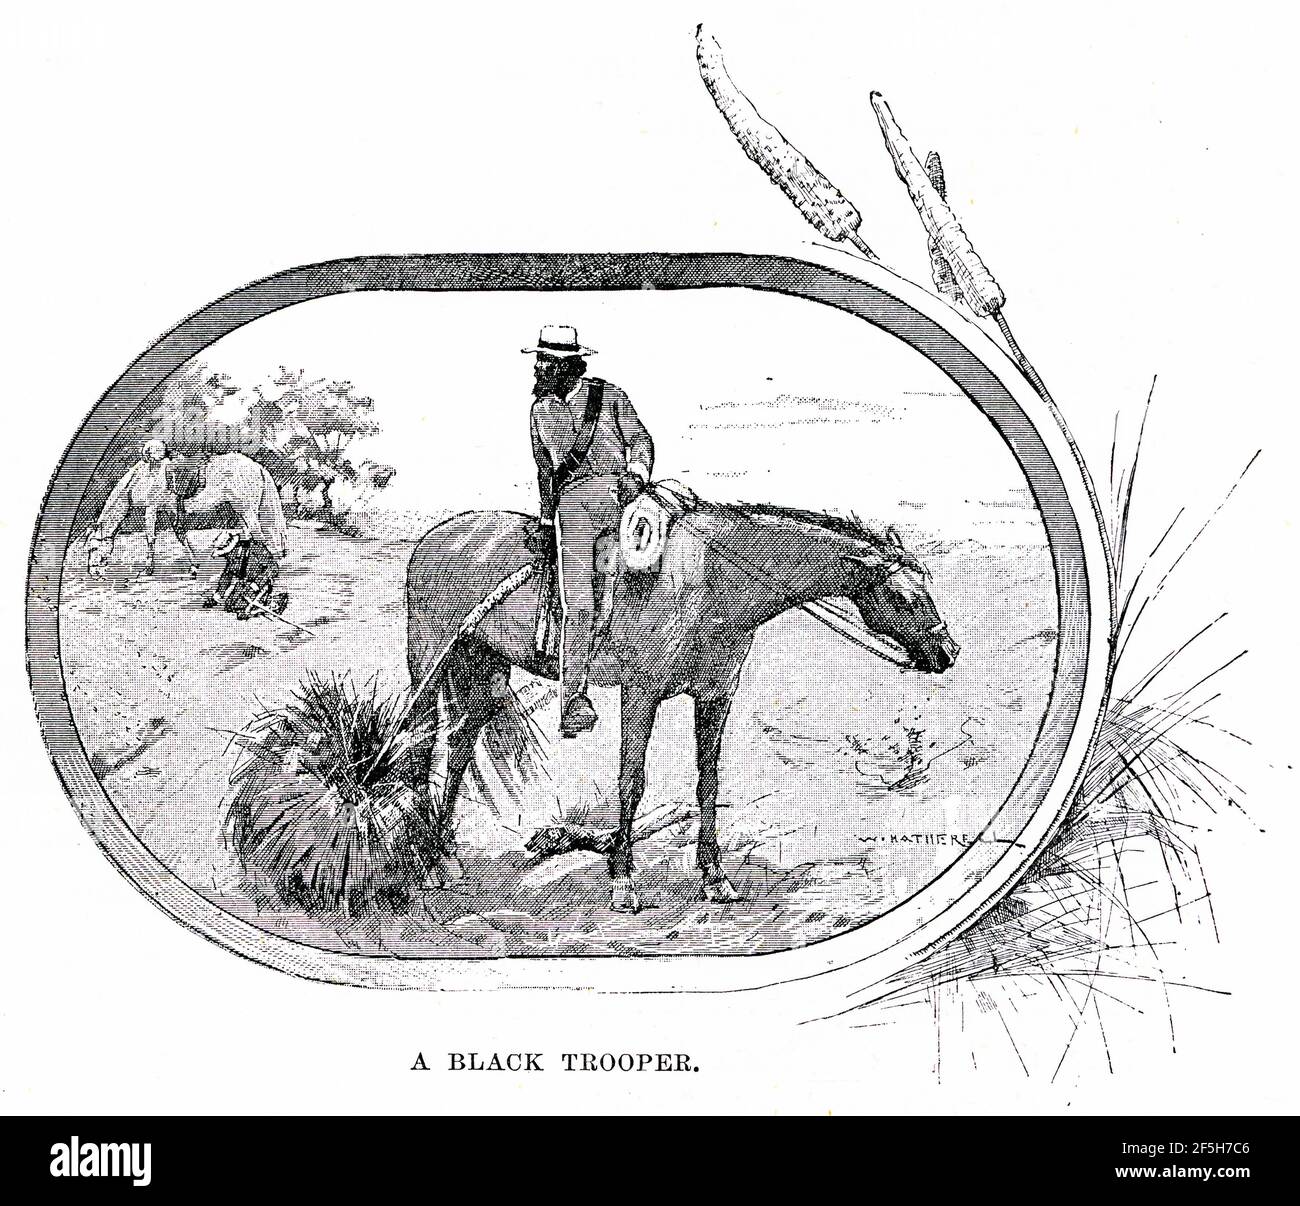 Gravure d'un soldat aborigène en Australie, vers 1887 Banque D'Images